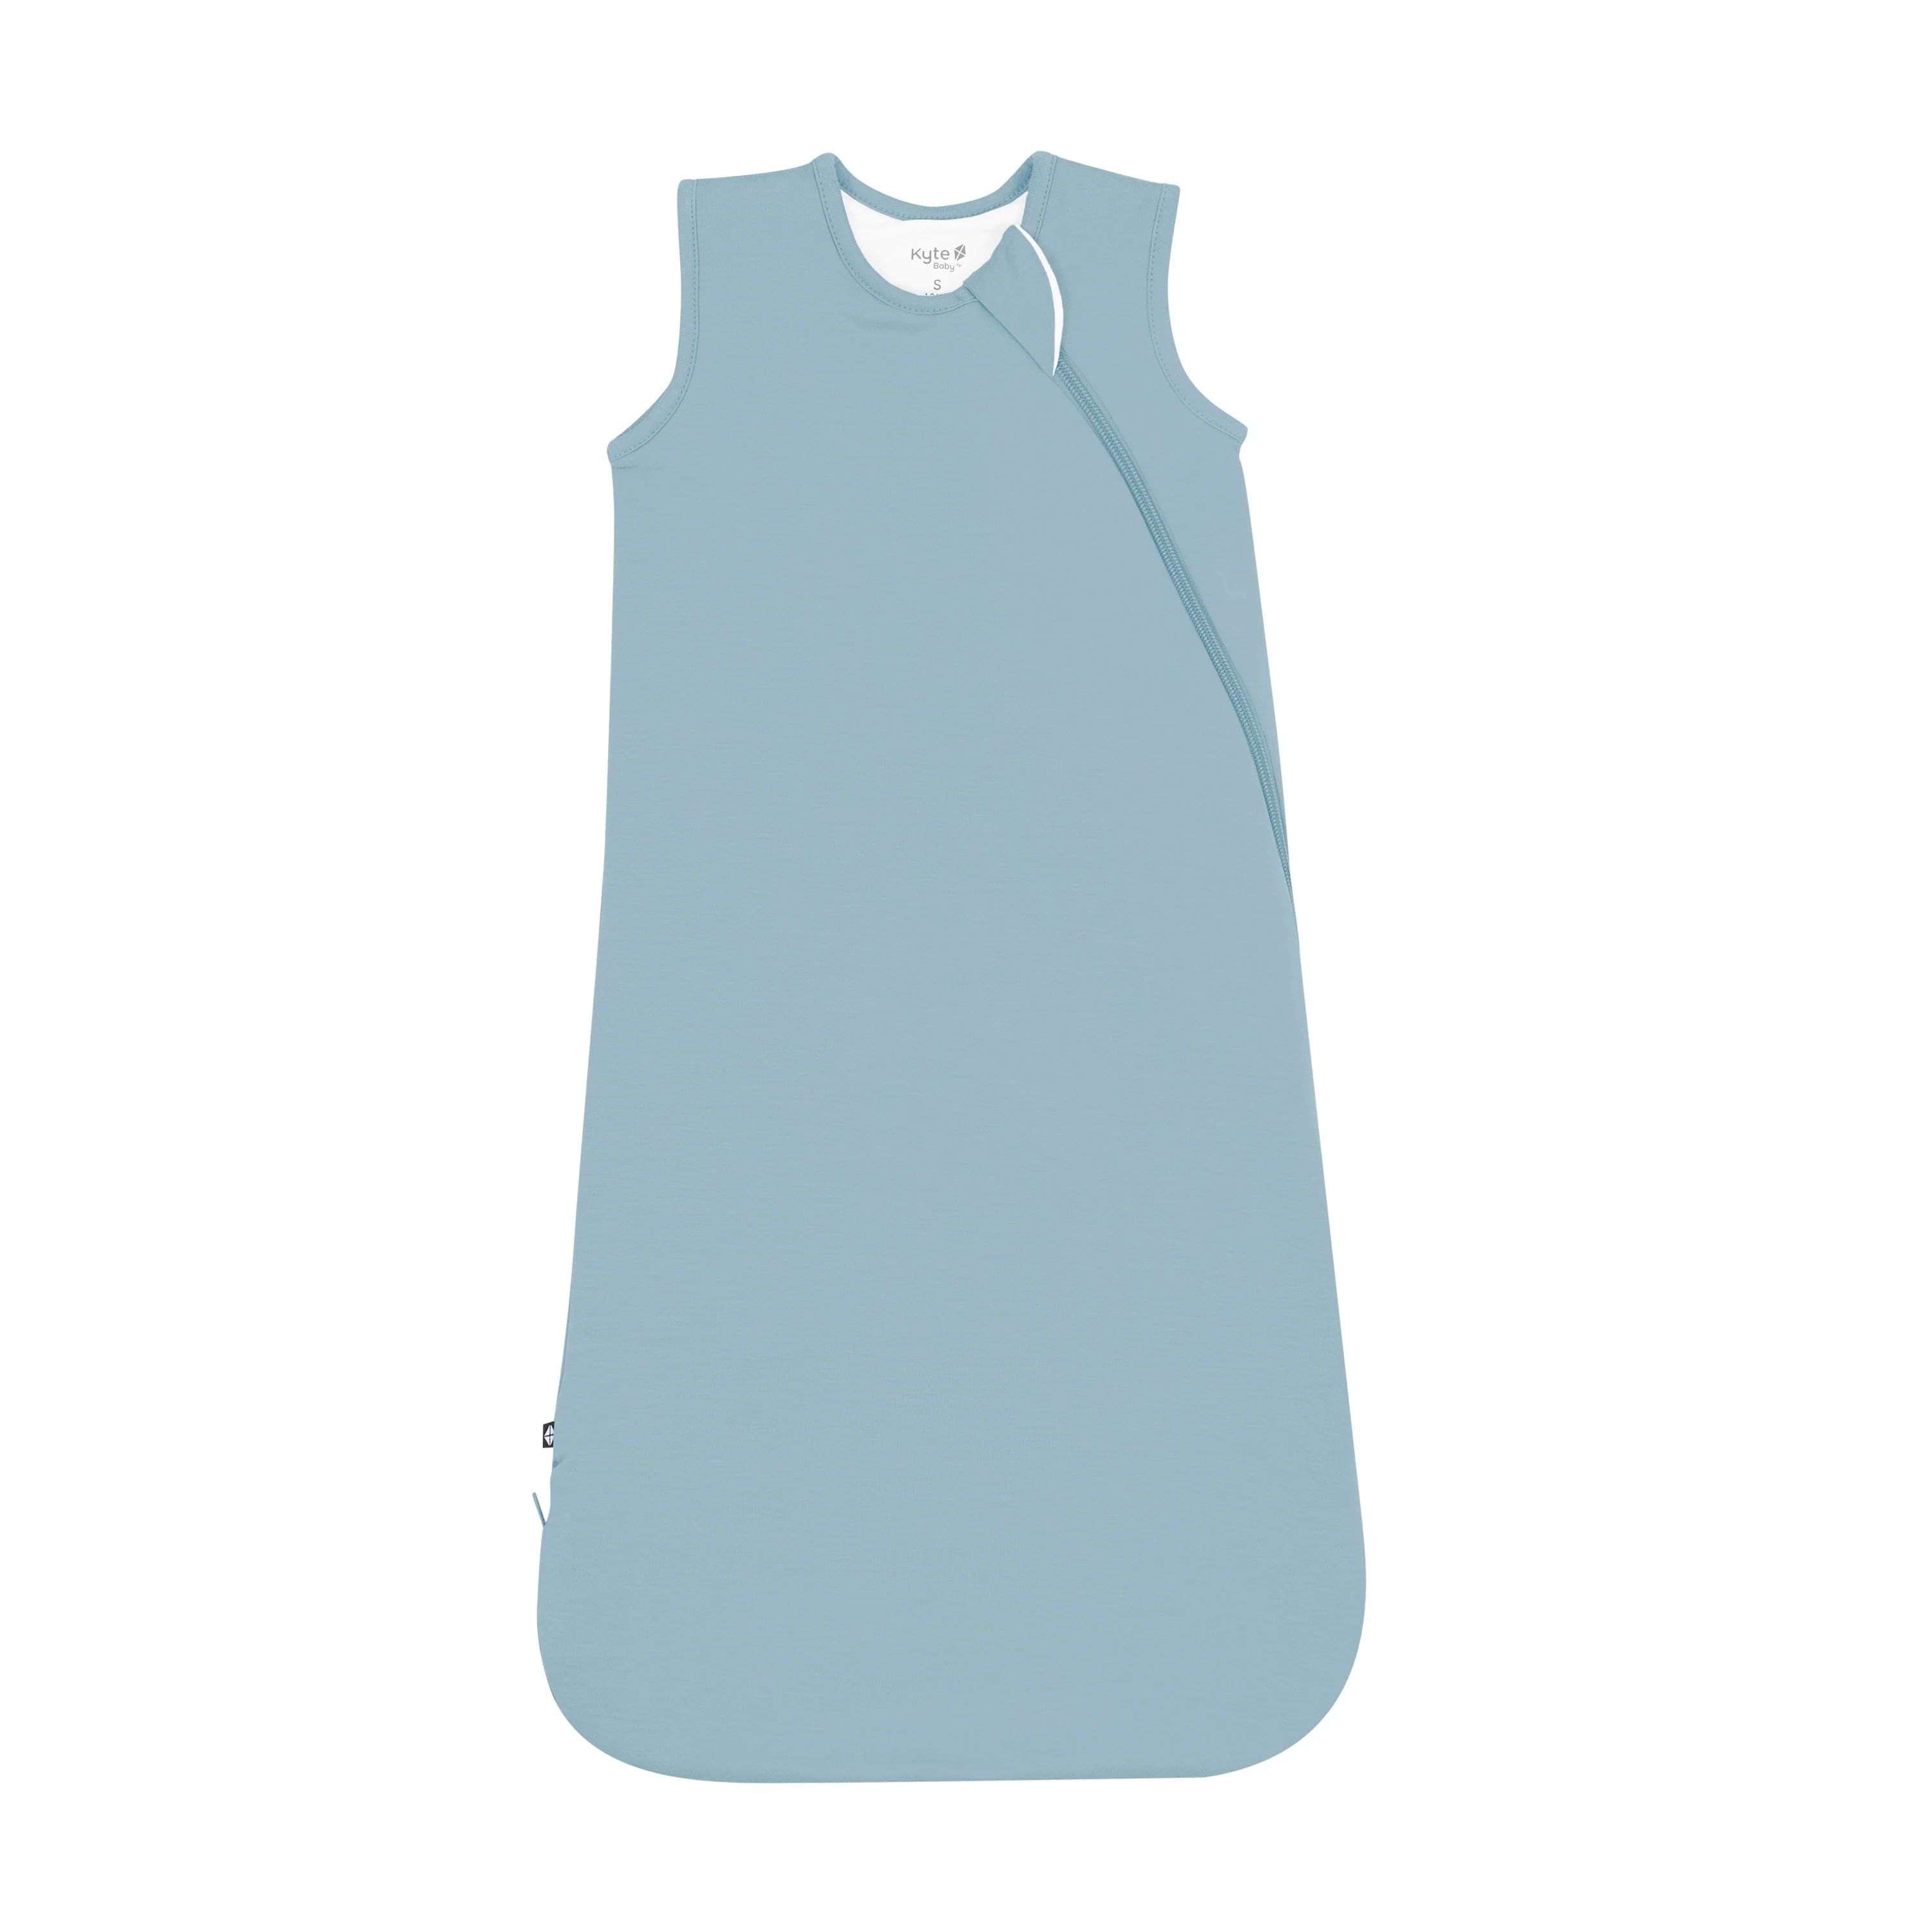 Sleep Bag in Dusty Blue 1.0 | Kyte BABY